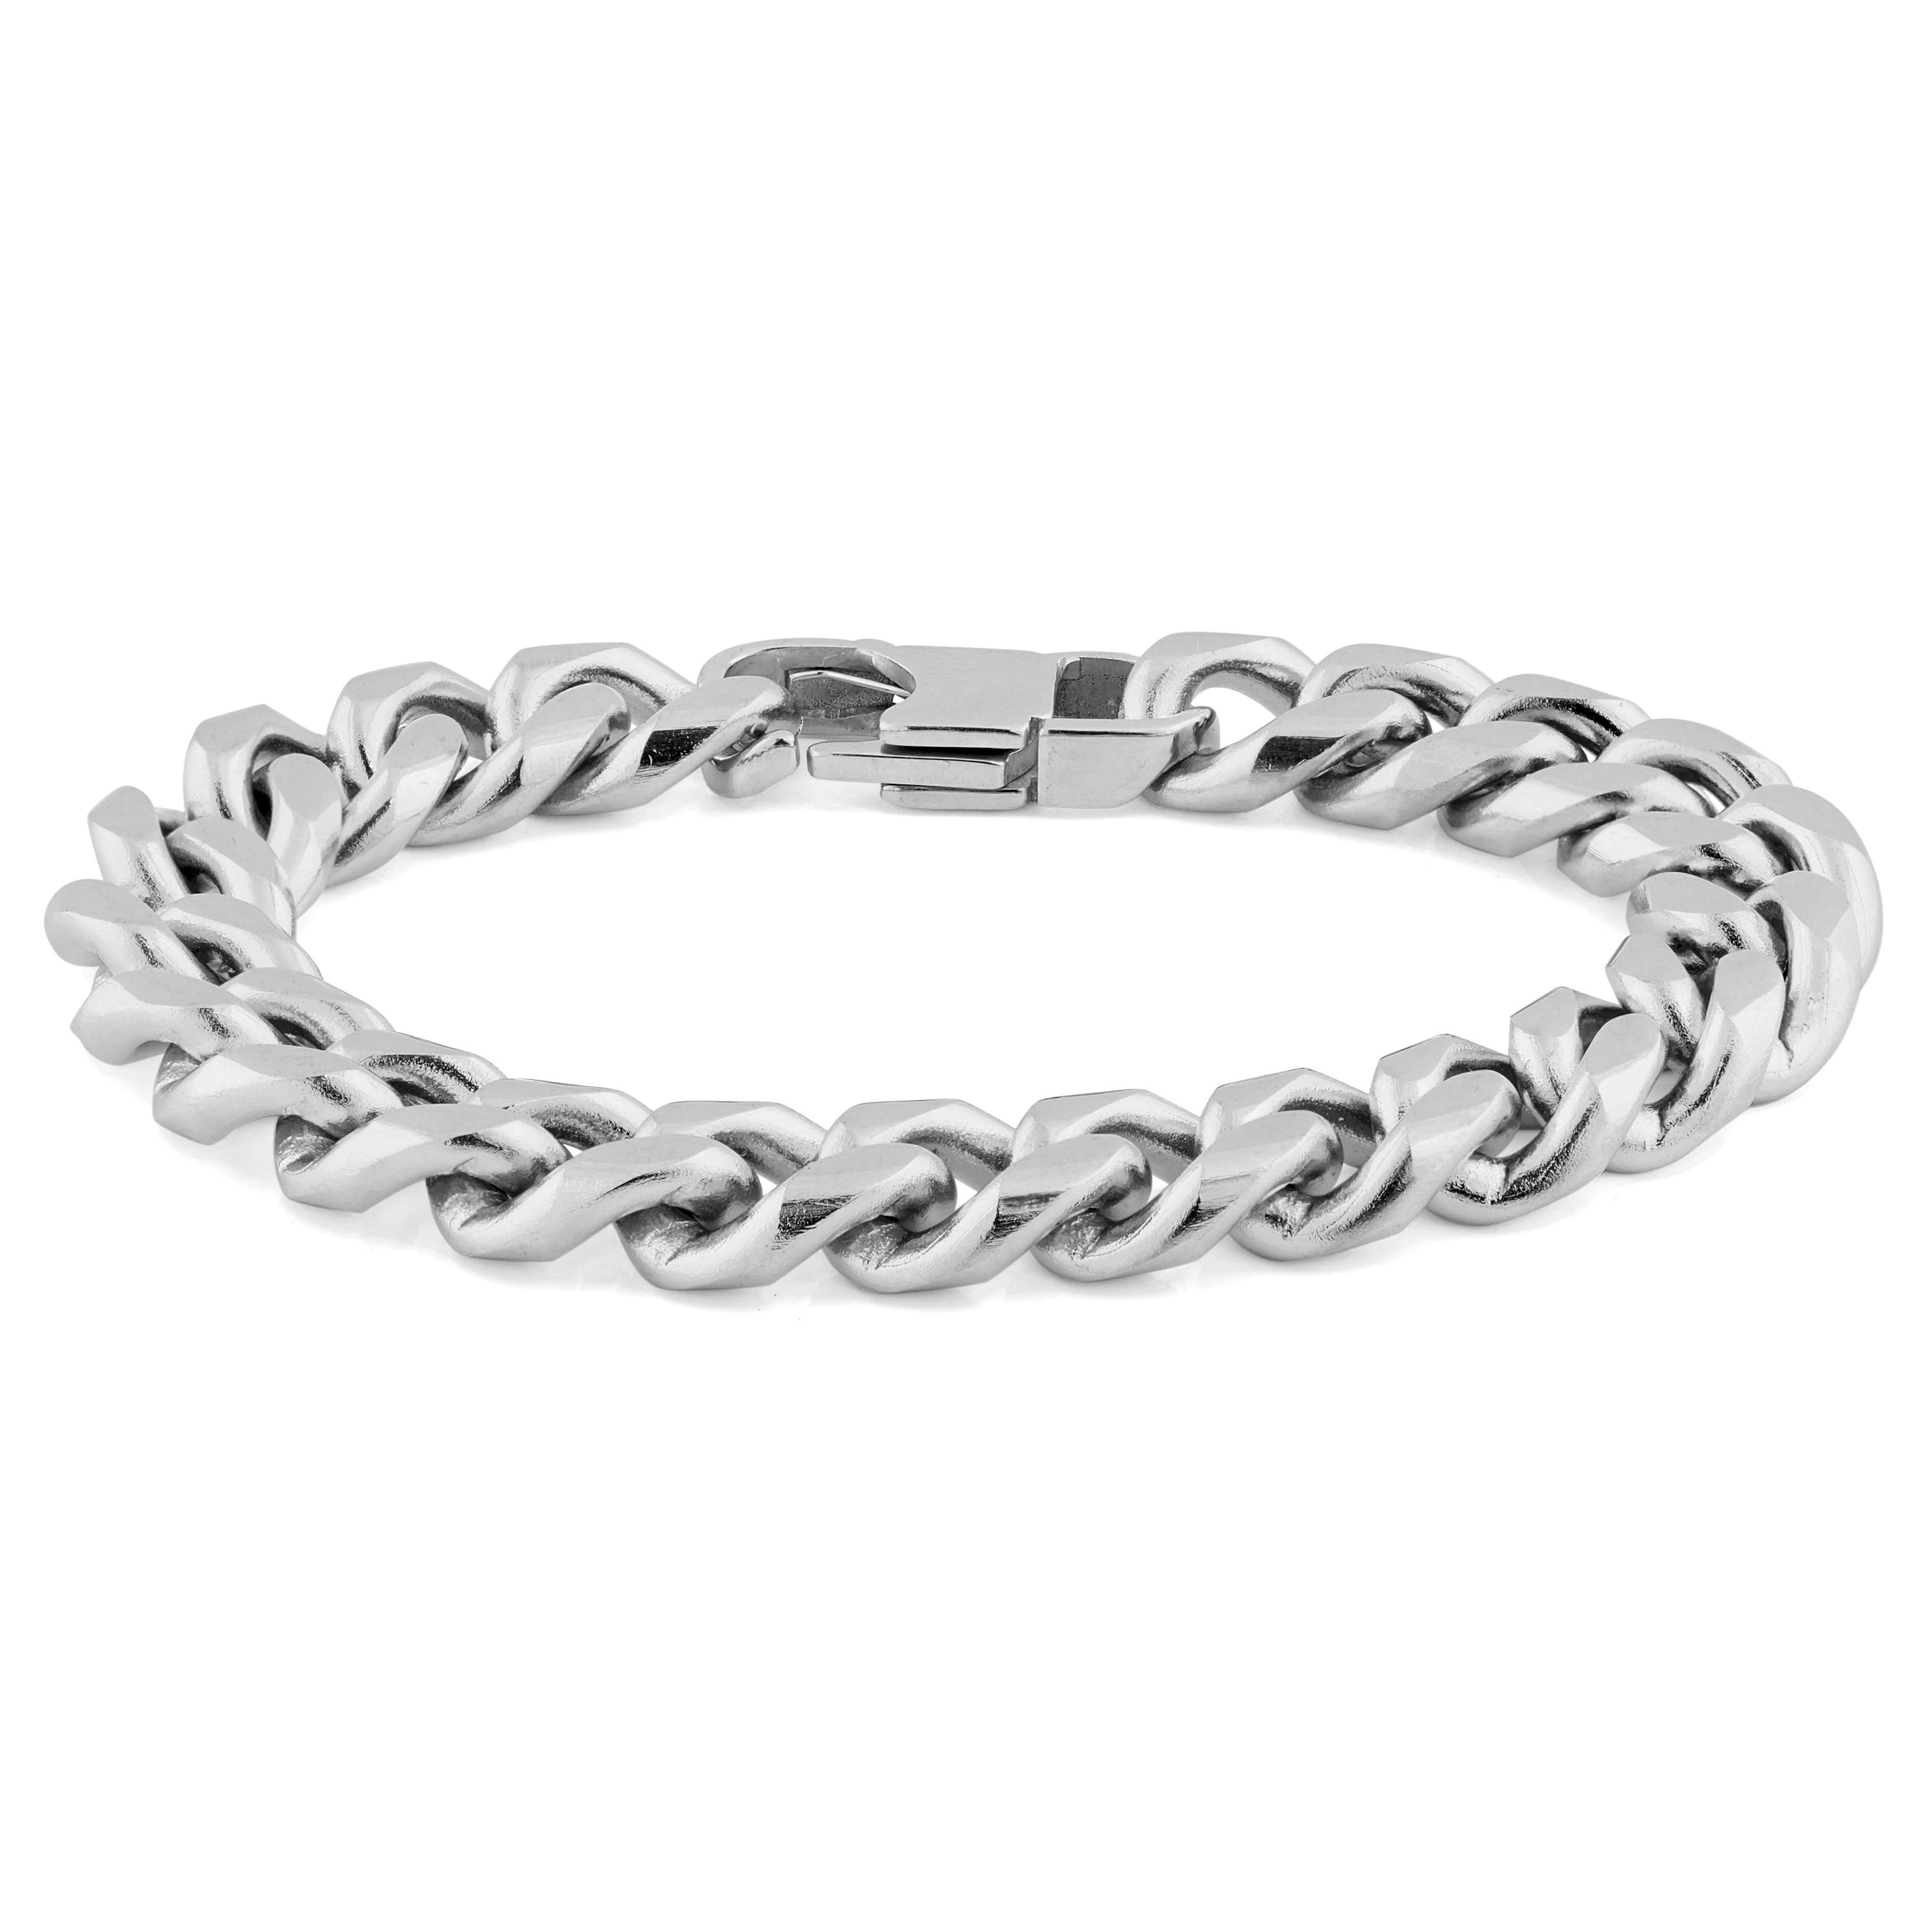 10 mm Silver-Tone Chain Bracelet